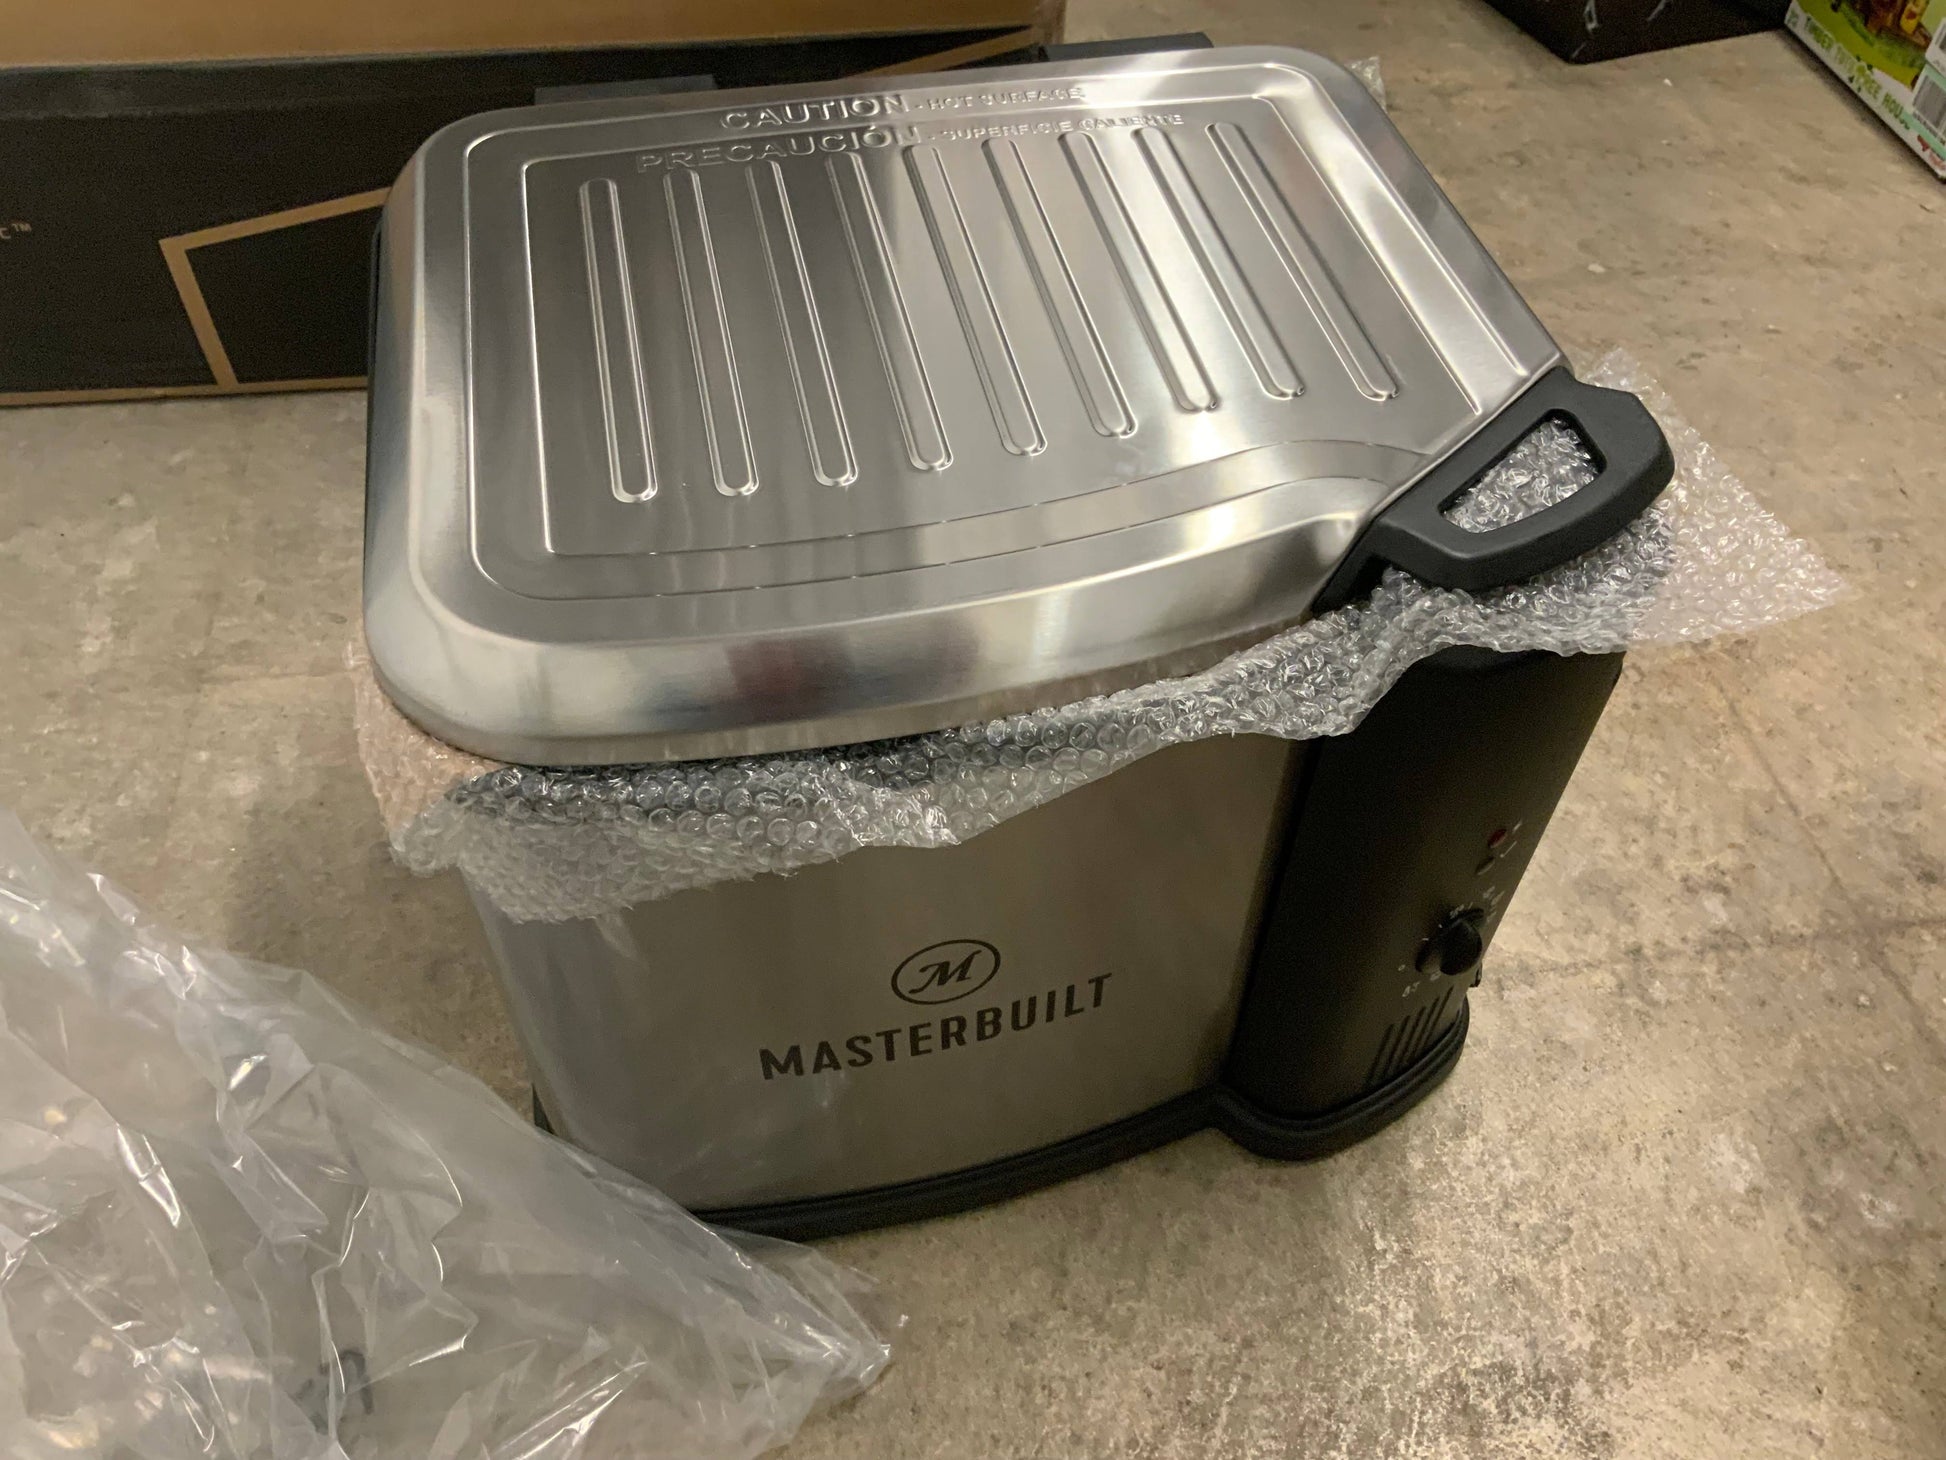 Masterbuilt 10 Liter XL Electric Fryer, Boiler, Steamer in Silver